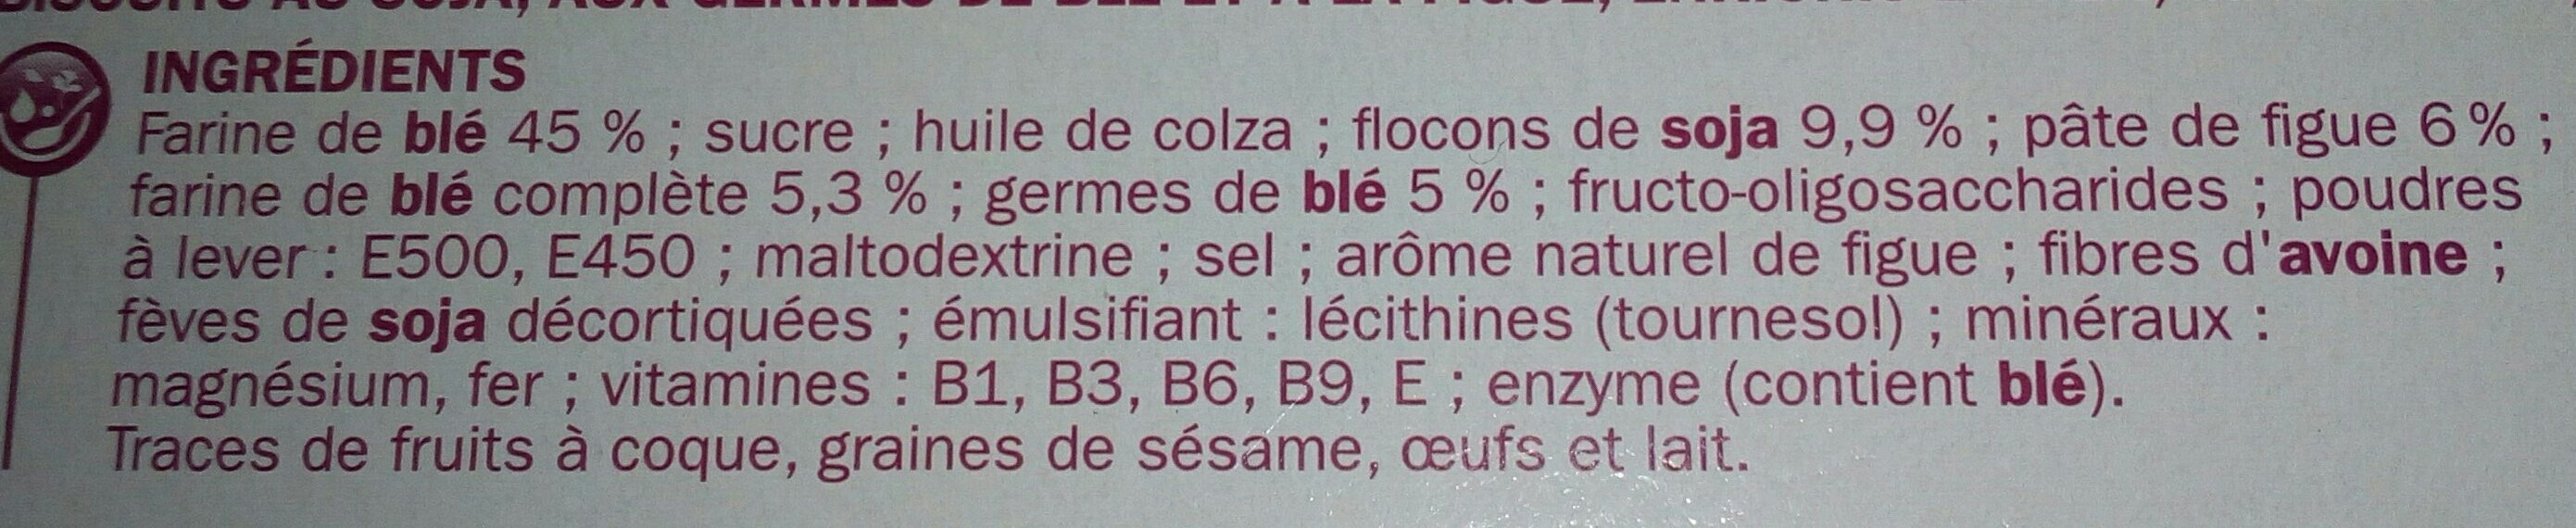 Biscuits aux germes de blé - Soja figue - Ingredients - fr